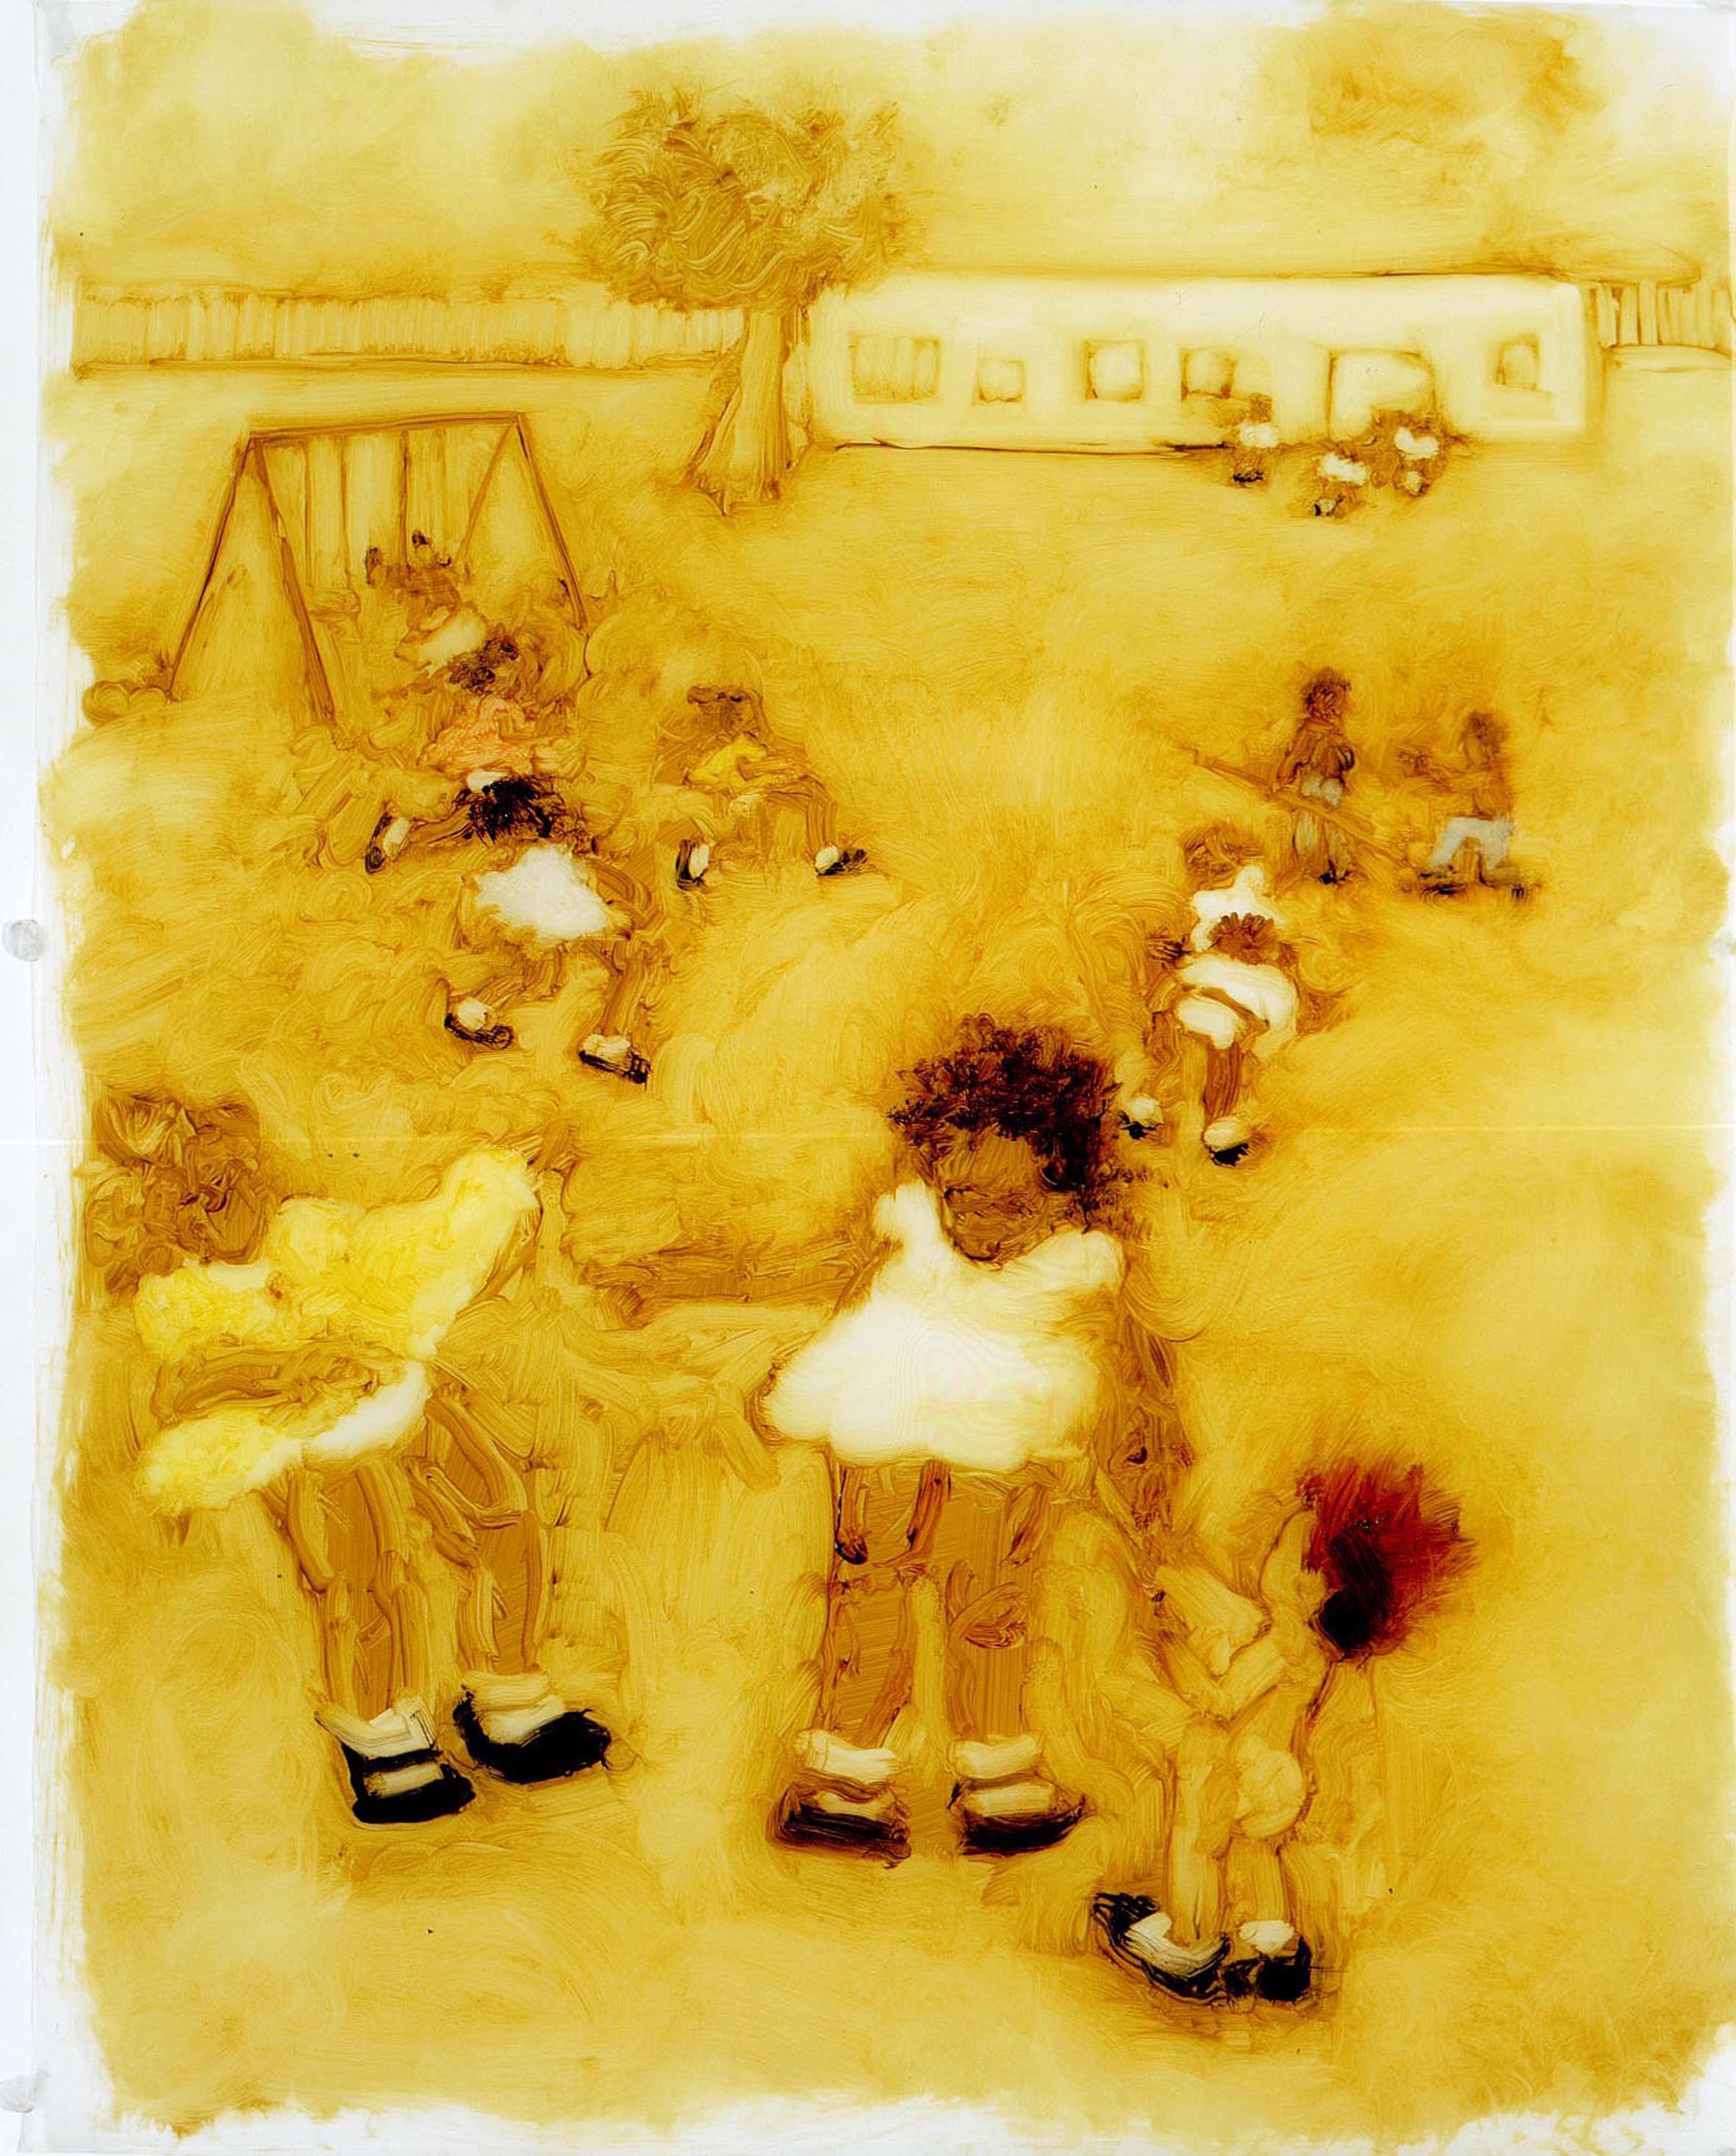 Kim Dingle, School Grounds, 2000, cm 61 x 48,3, olio su pergamena